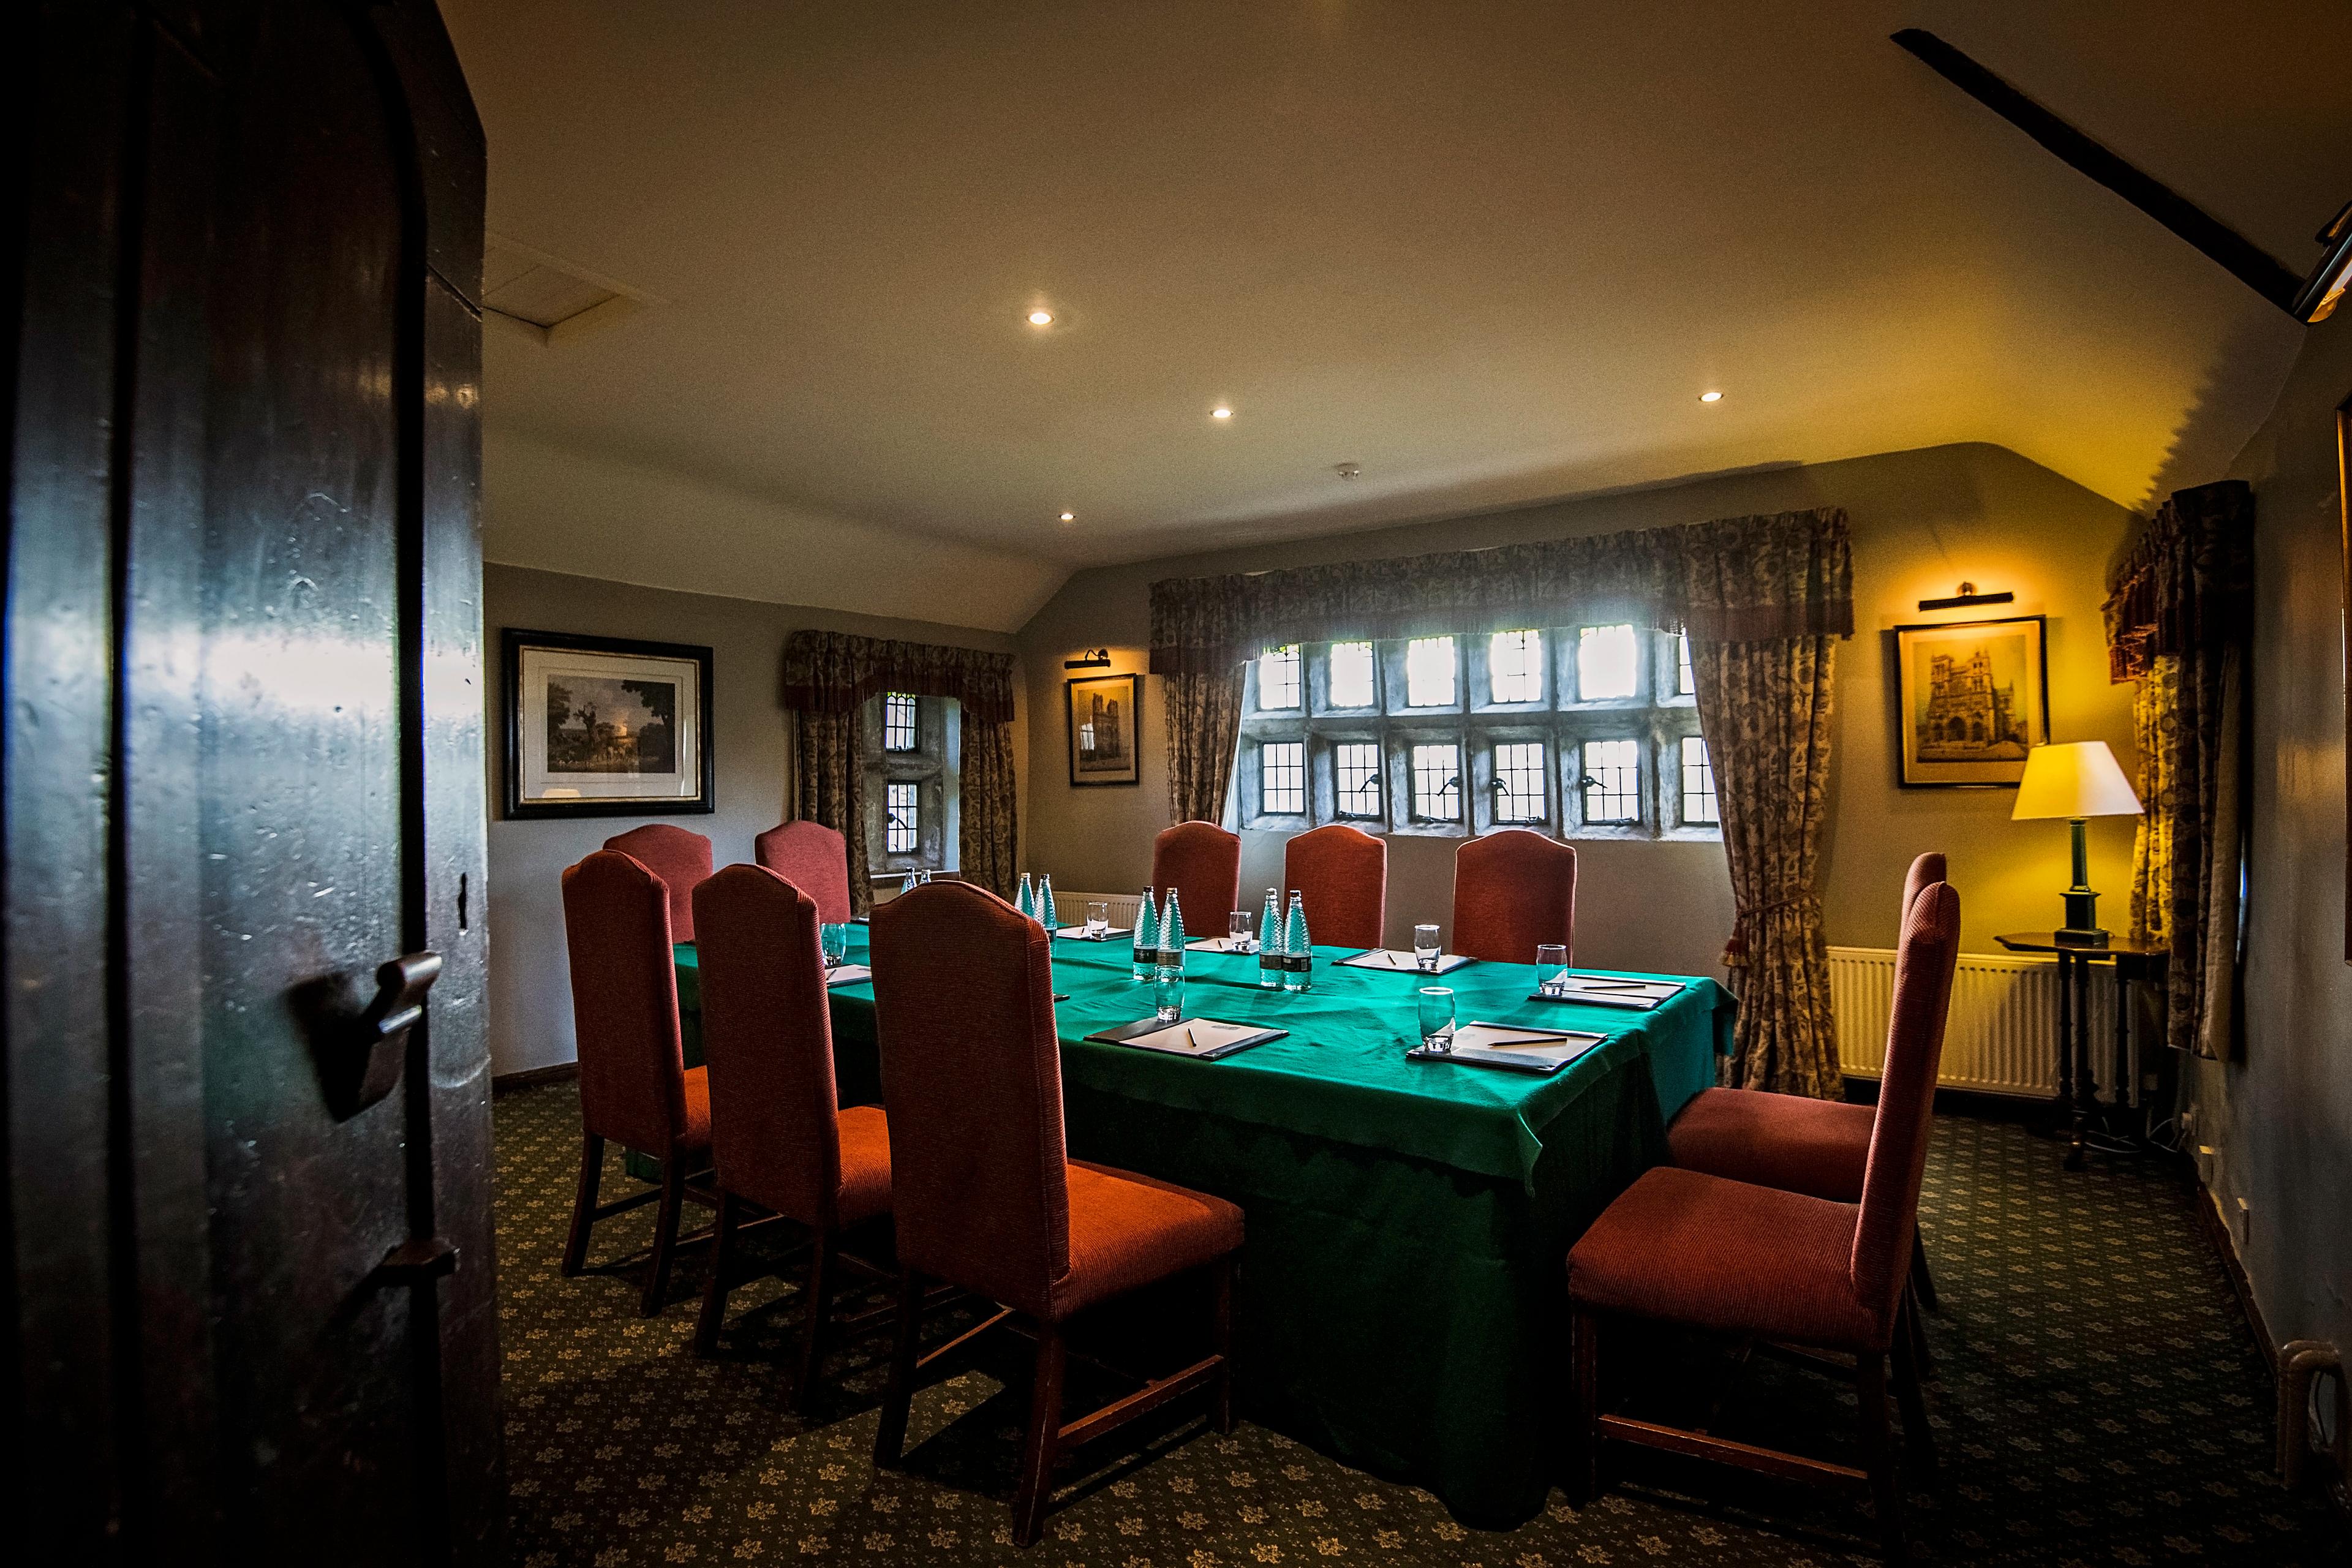 The De Aldworth Boardroom, Holdsworth House Hotel & Restaurant photo #1